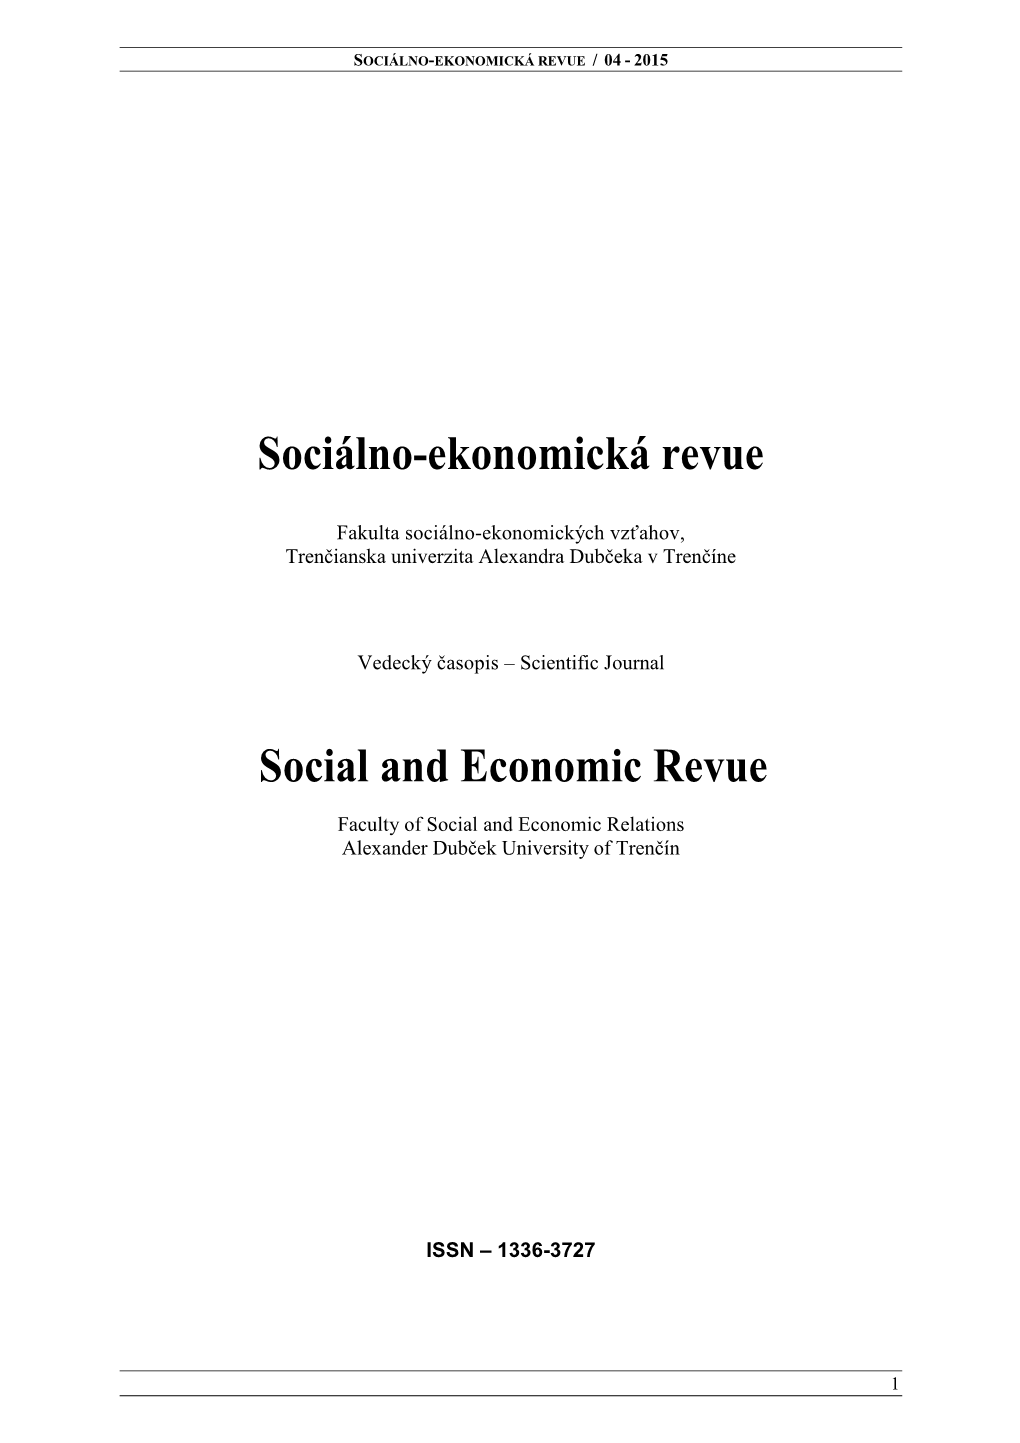 Sociálno-Ekonomická Revue Social and Economic Revue